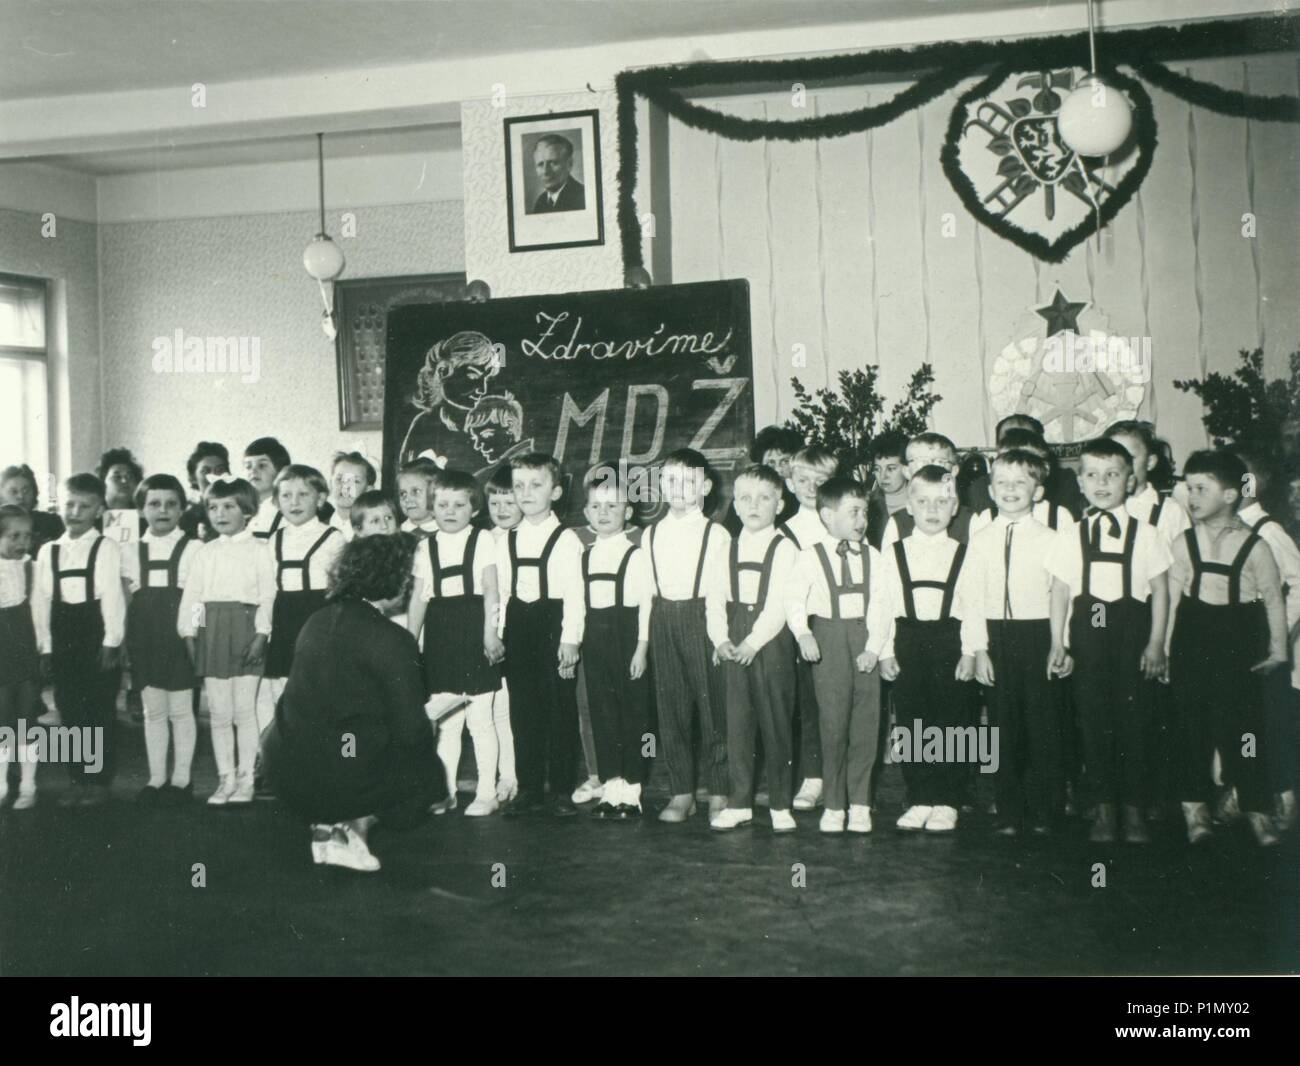 THE CZECHOSLOVAK SOCIALIST REPUBLIC - CIRCA 1960s: Retro photo shows pupils in the classroom. They celebrate  International Women's Day (IWD). Vintage black & white photography. Stock Photo